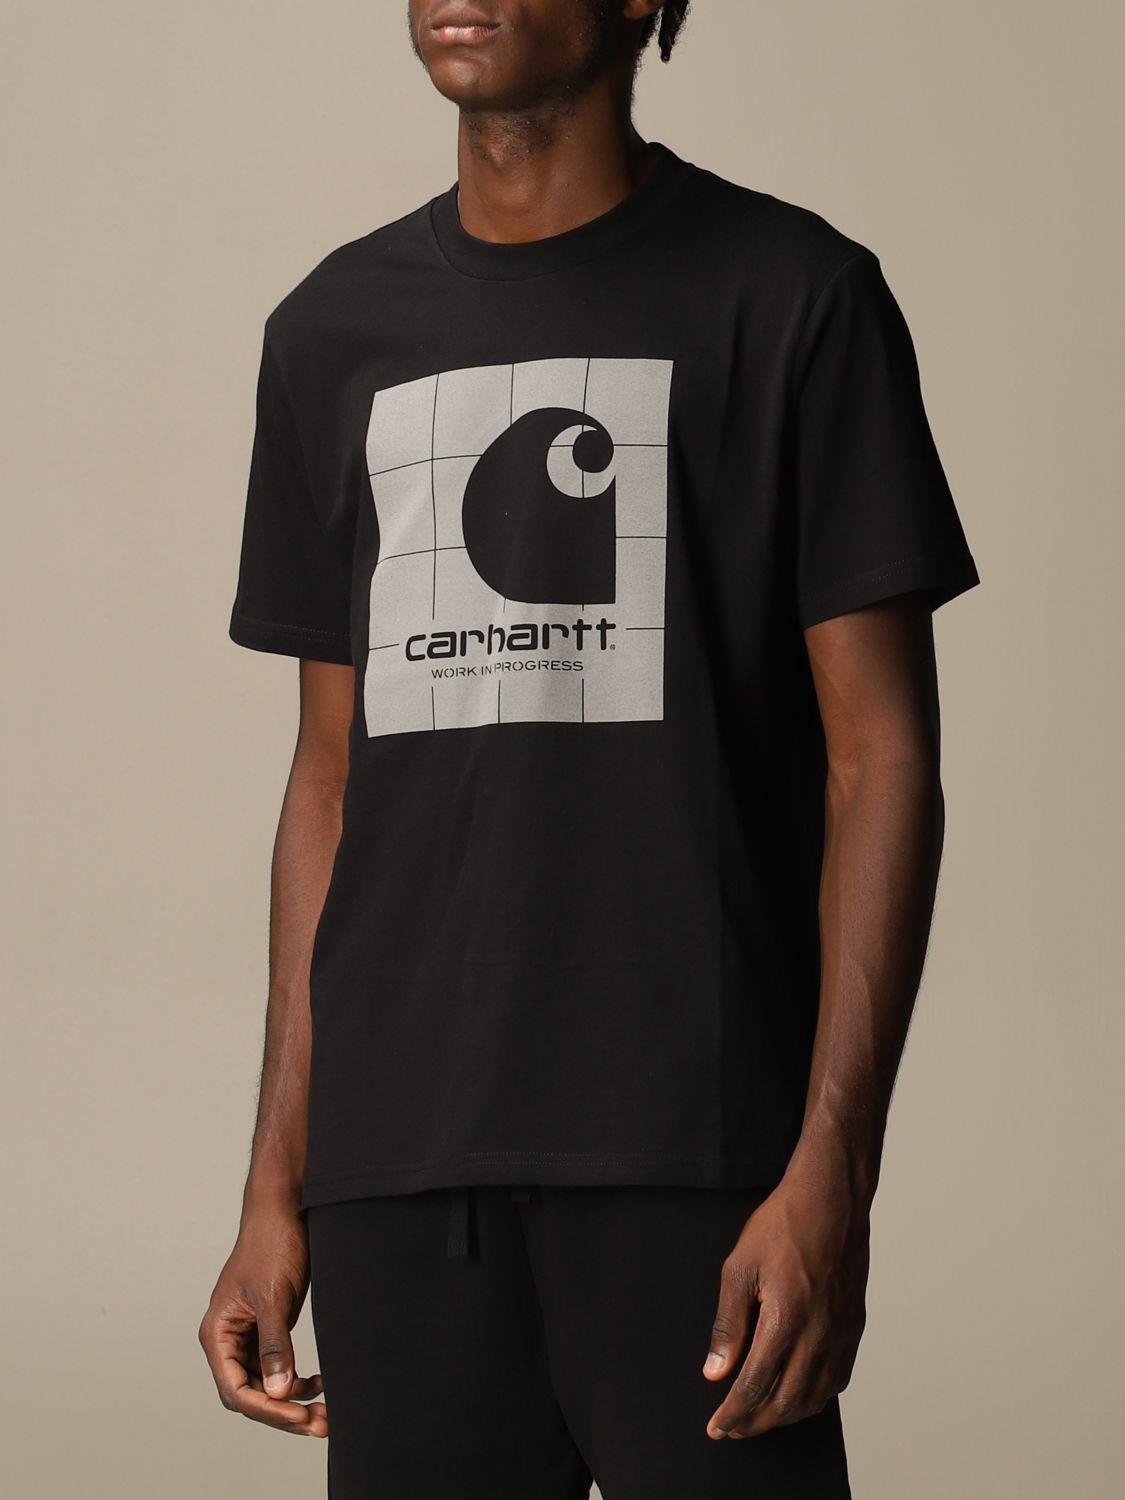 Carhartt T-shirt in Black for Men - Lyst